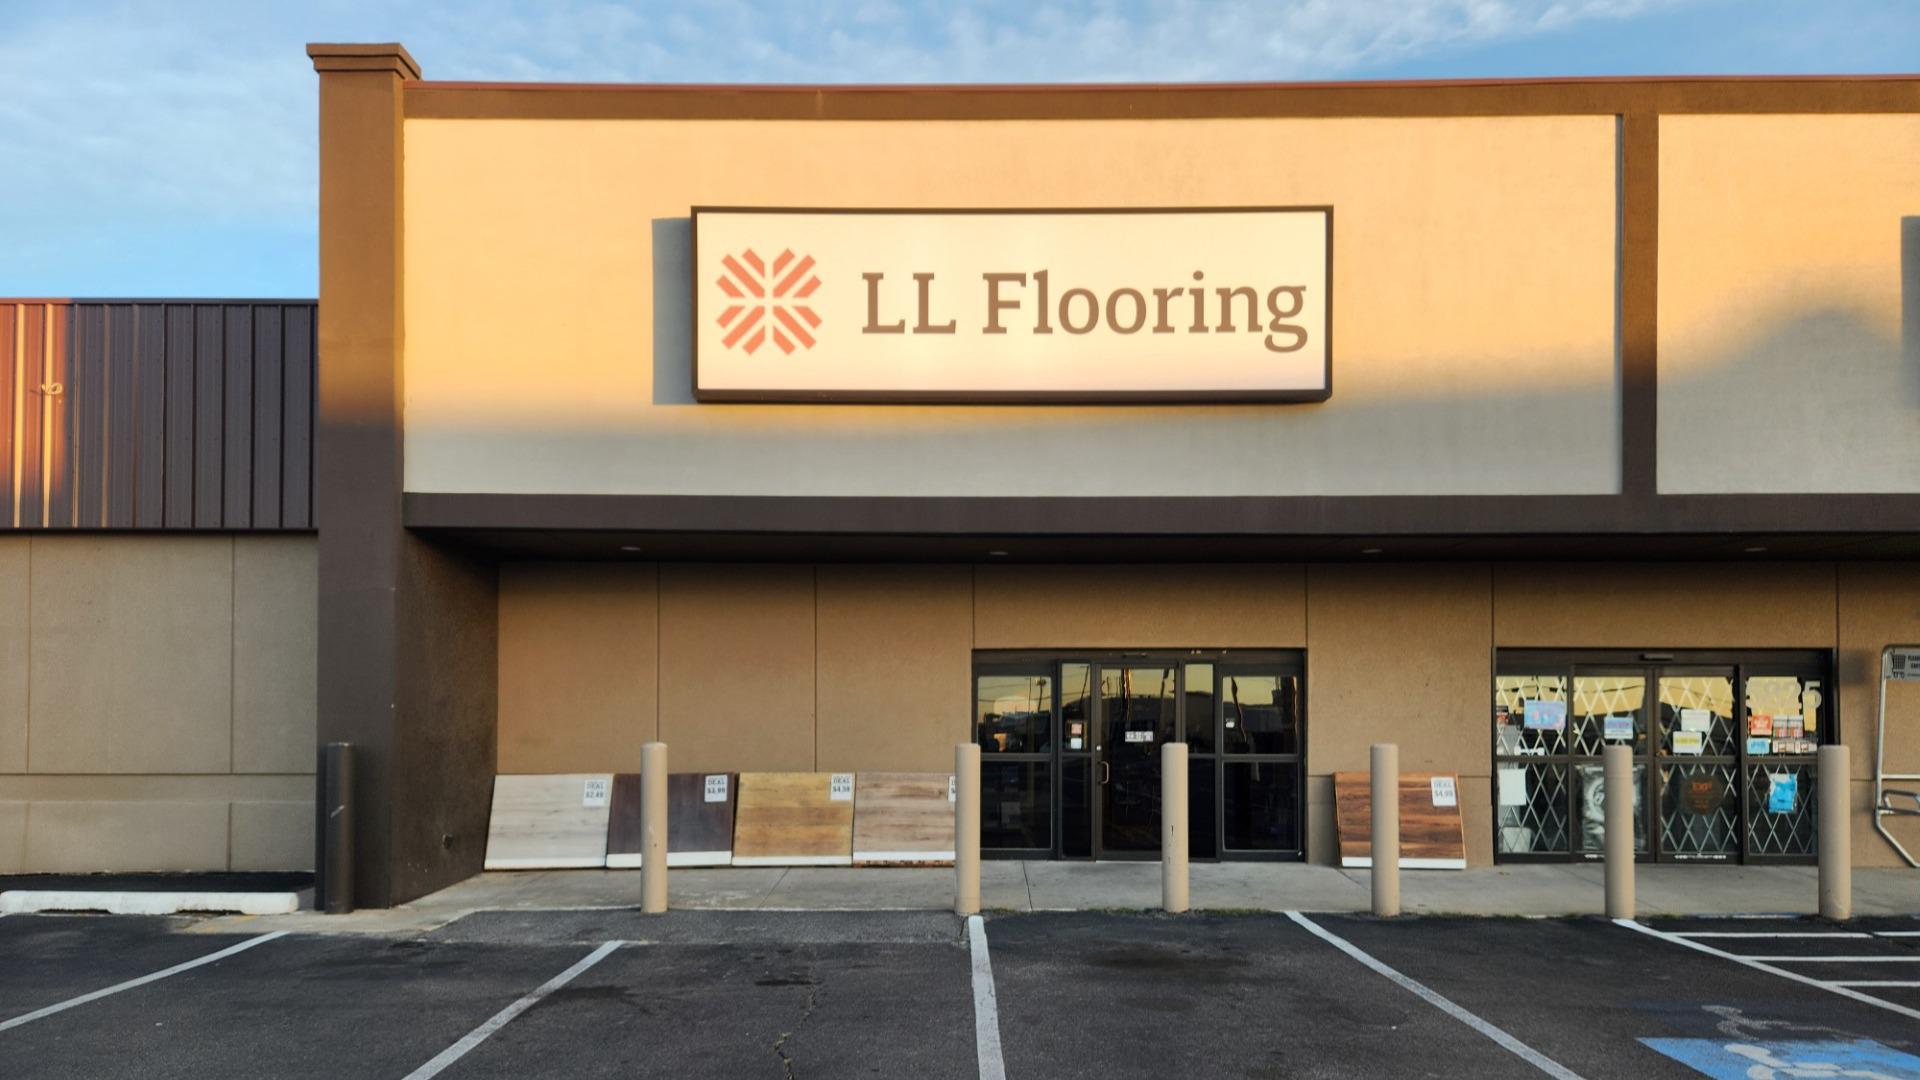 LL Flooring #1066 Oklahoma City | 5835 West Reno Avenue | Storefront